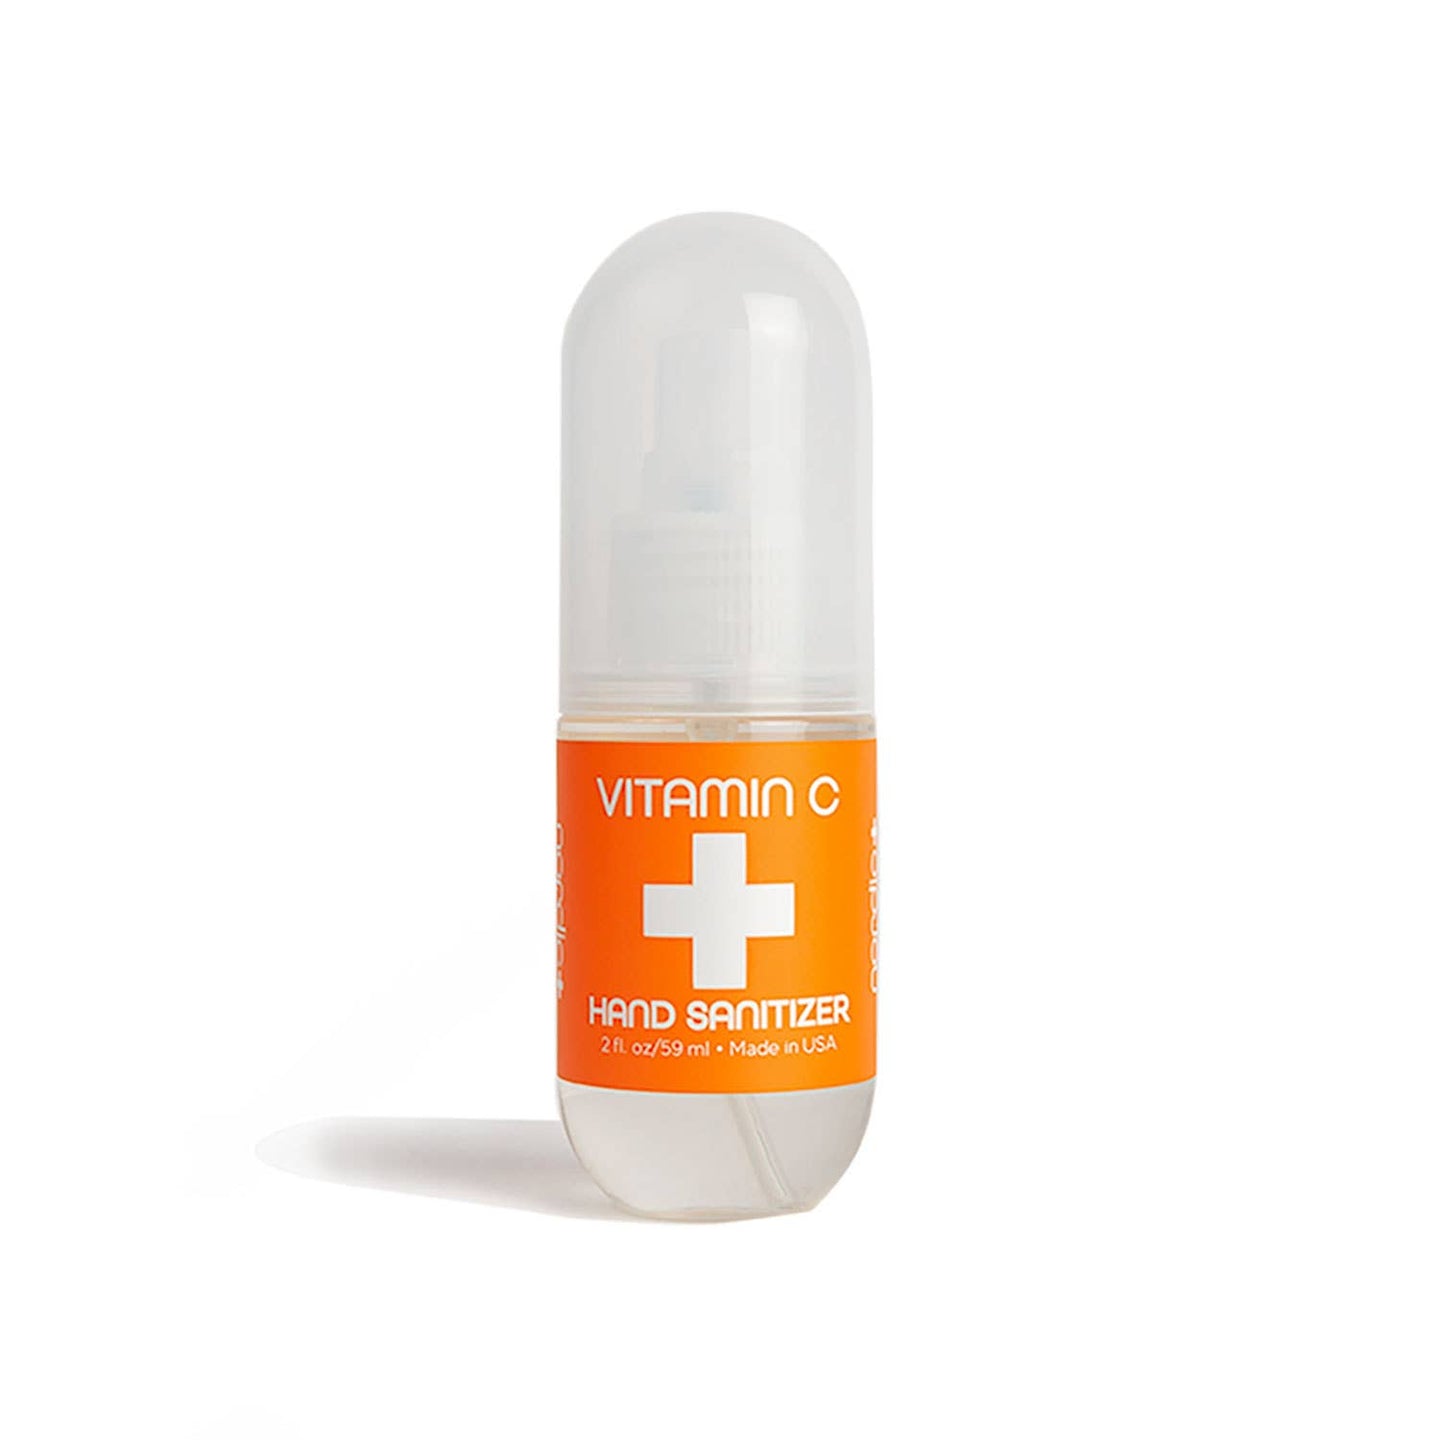 Kalastyle - Nordic+Wellness™ Vitamin C Hand Sanitizer